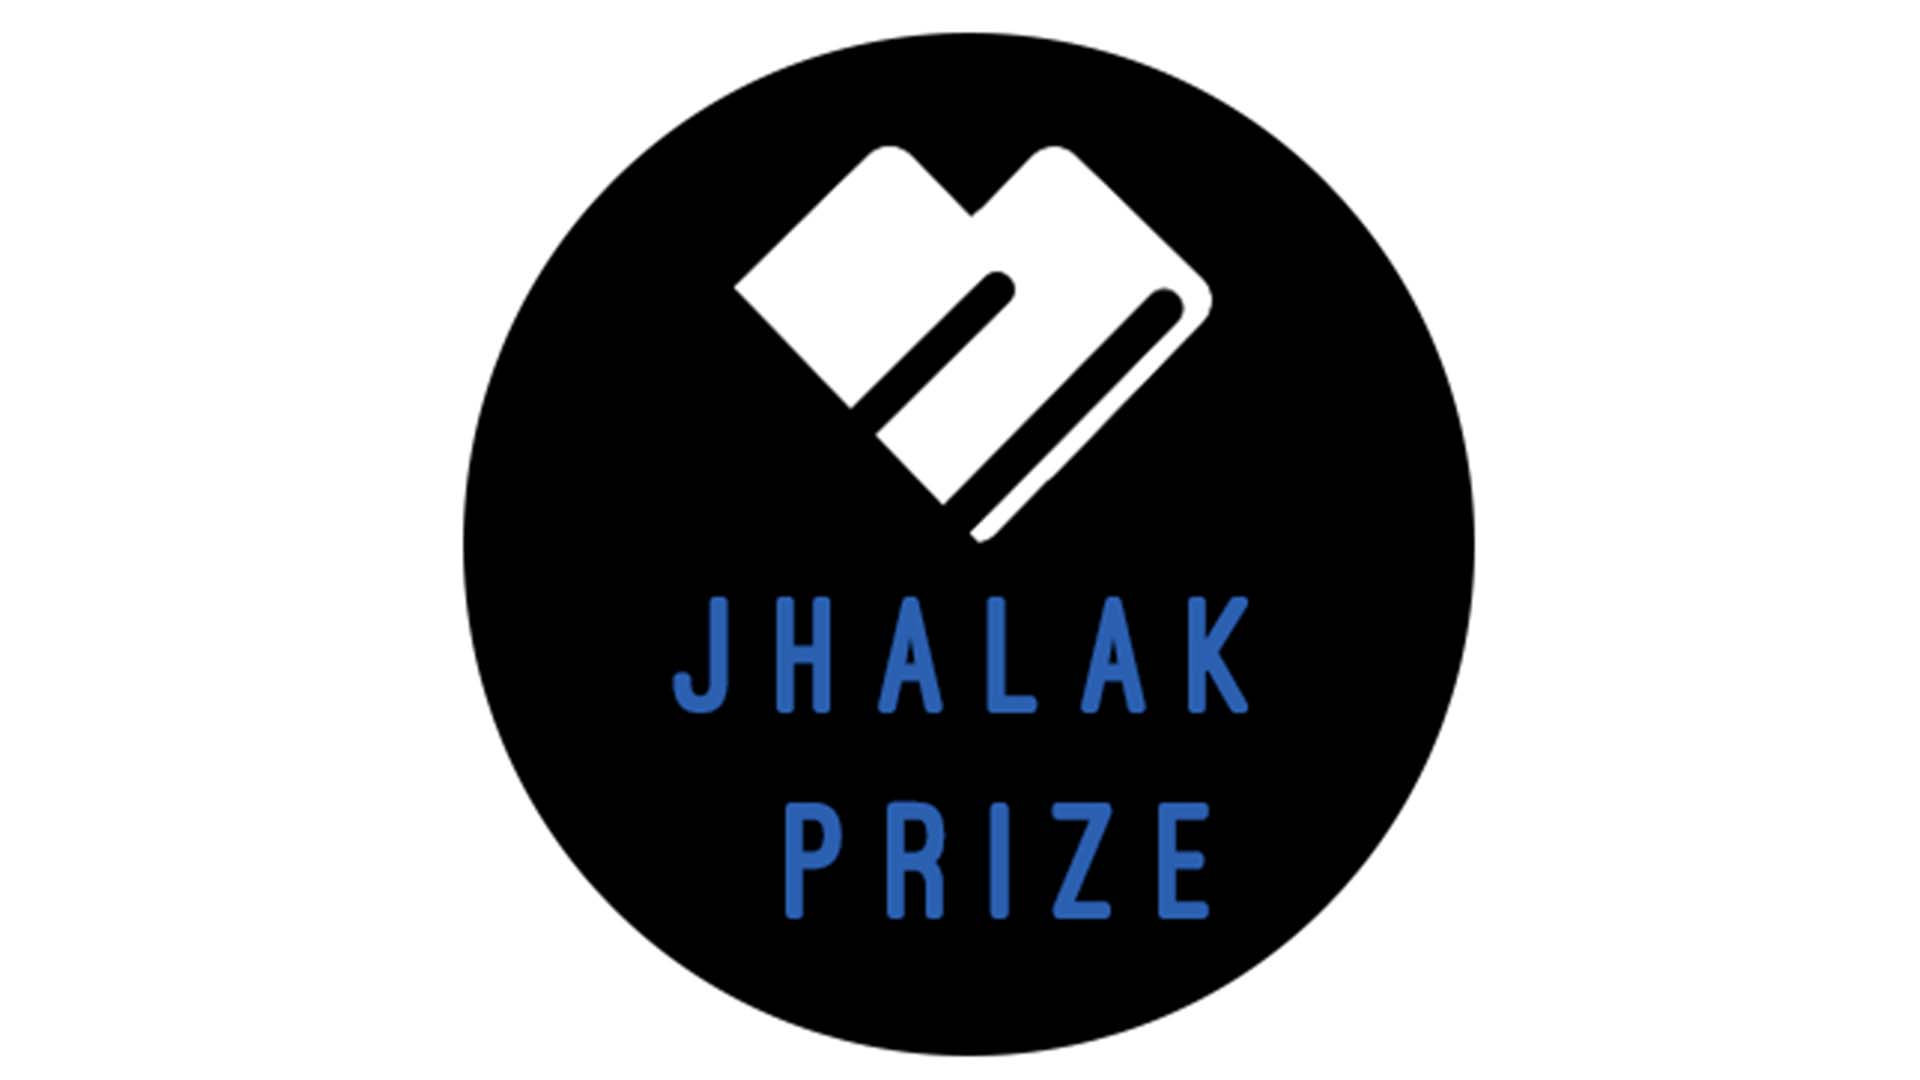 Jhalak Prize website